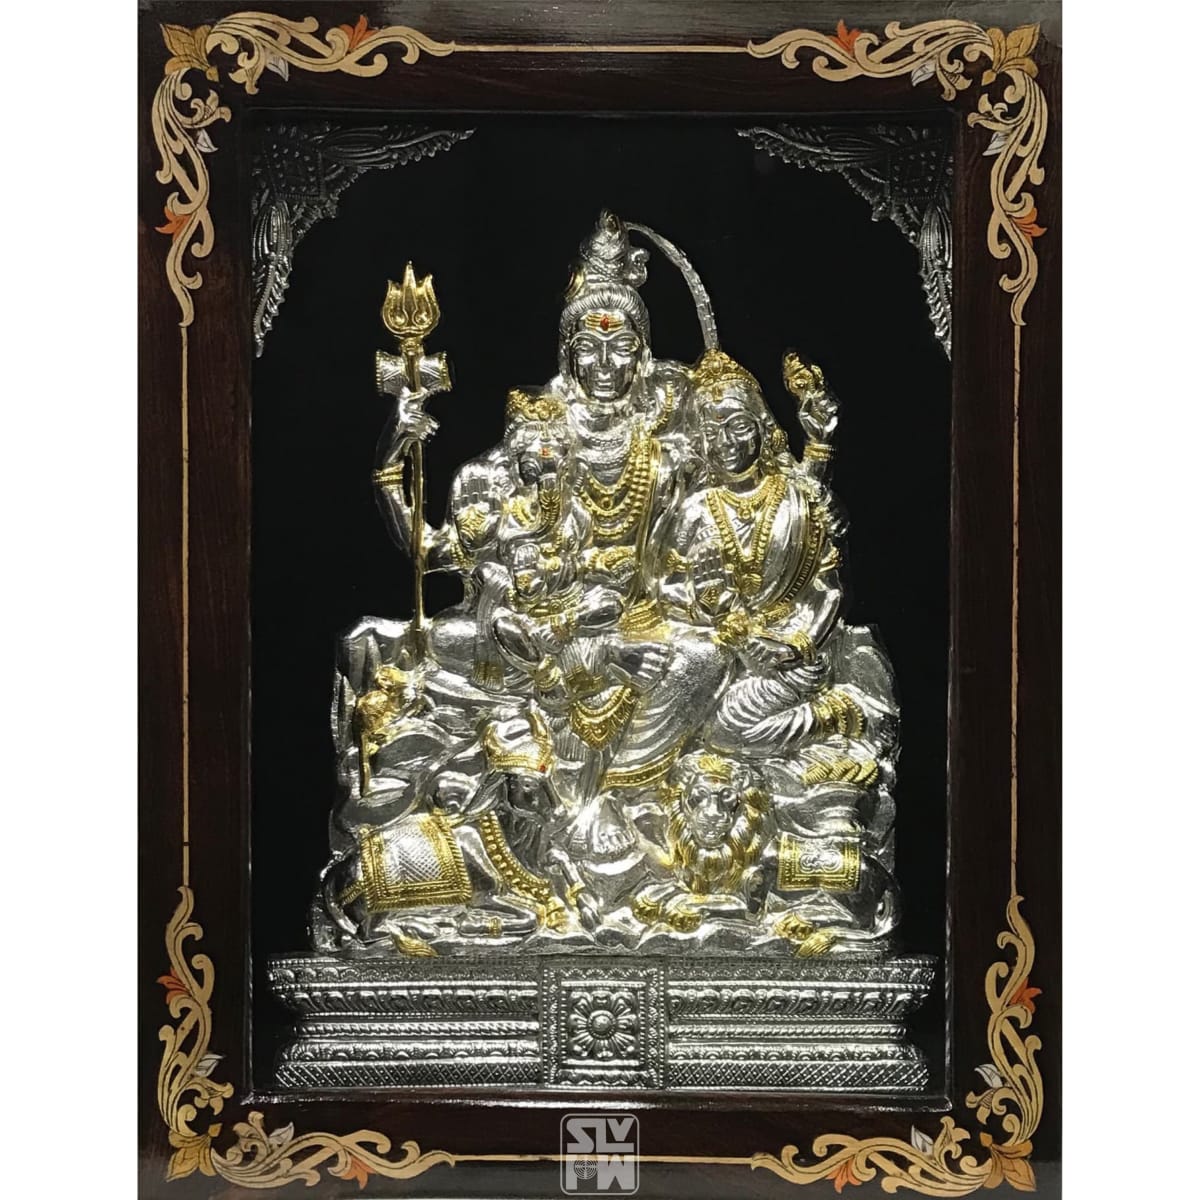 Buy Eshwara Parvati Ganesha 15x19 Gold Polish Online | Photo ...